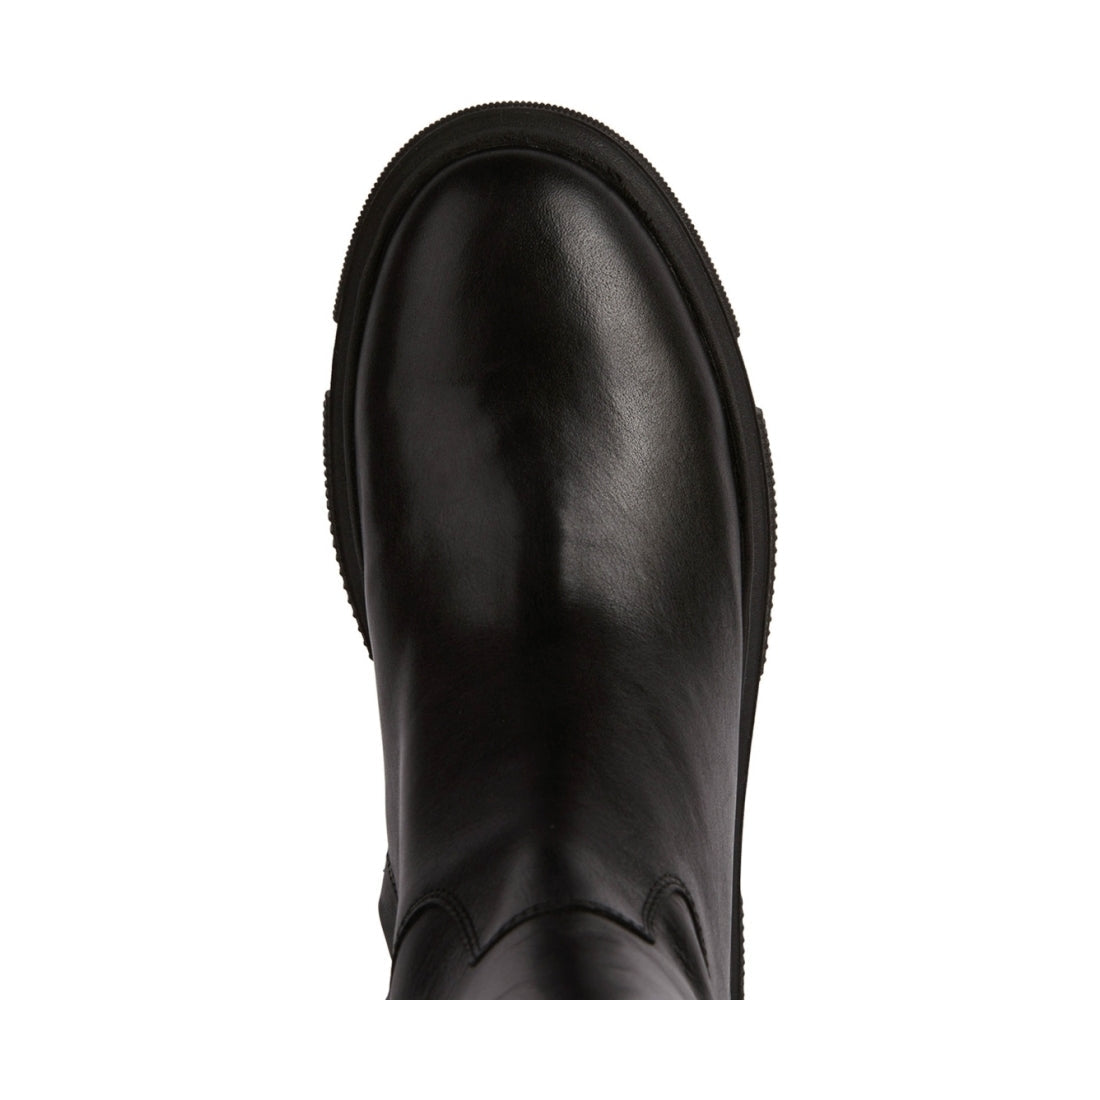 Geox womens Black isotte boots | Vilbury London